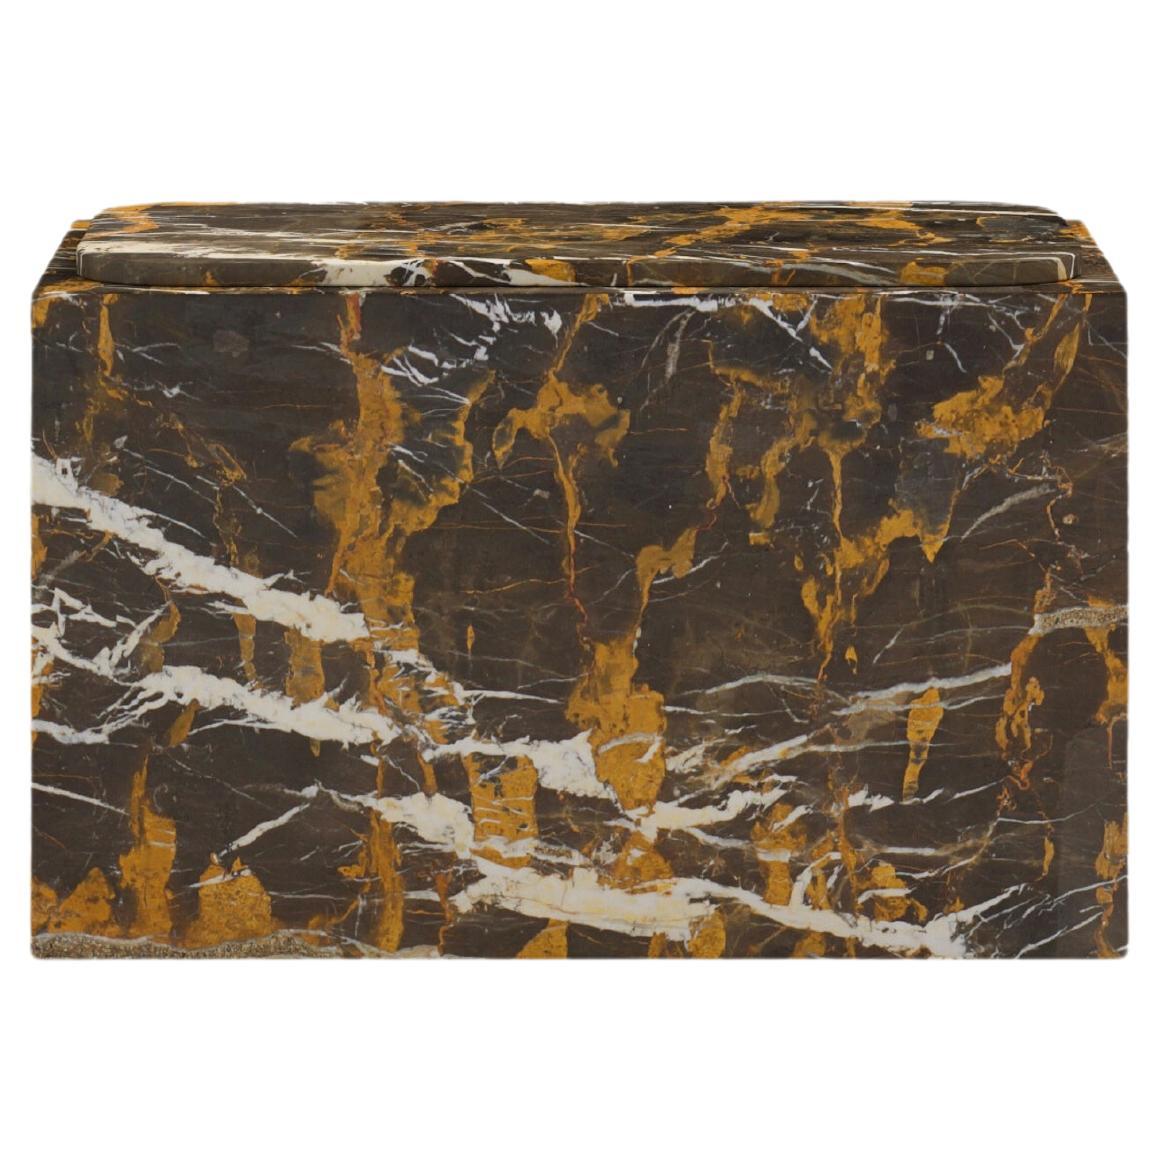 FORM(LA) Cubo Rectangle Side Table 30”L x 16"W x 19”H Nero Michaelangelo Marble For Sale